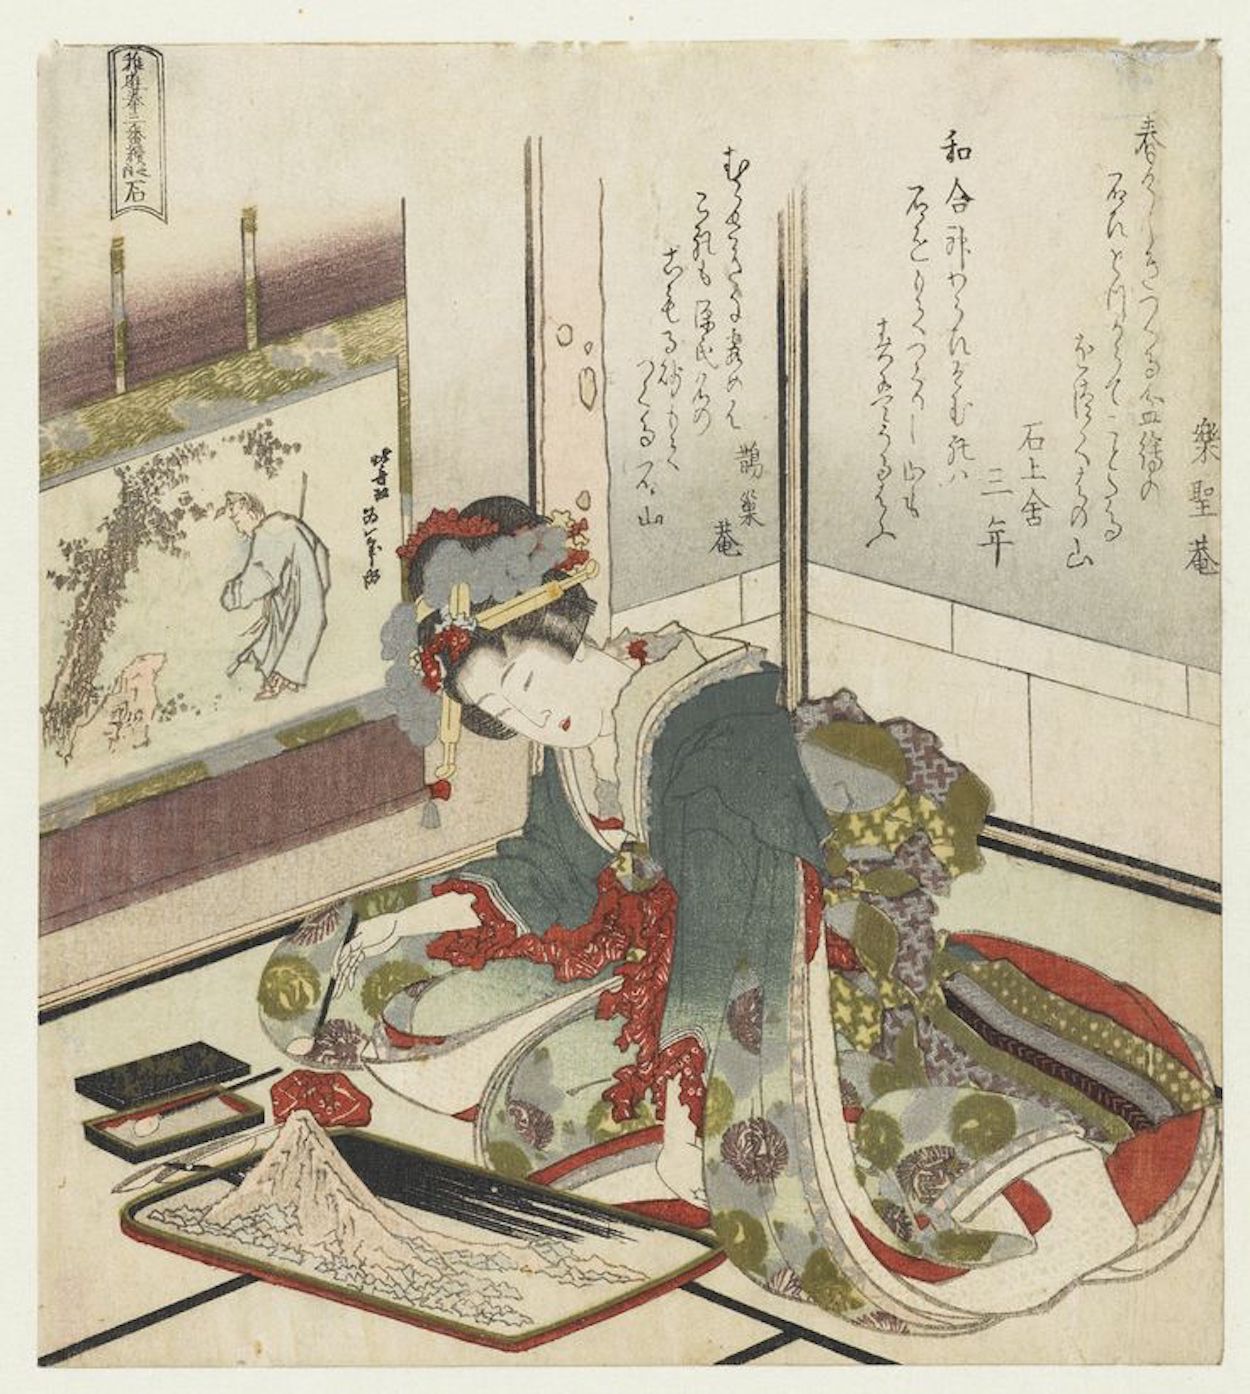 Kámen by Katsushika Hokusai - 1823 